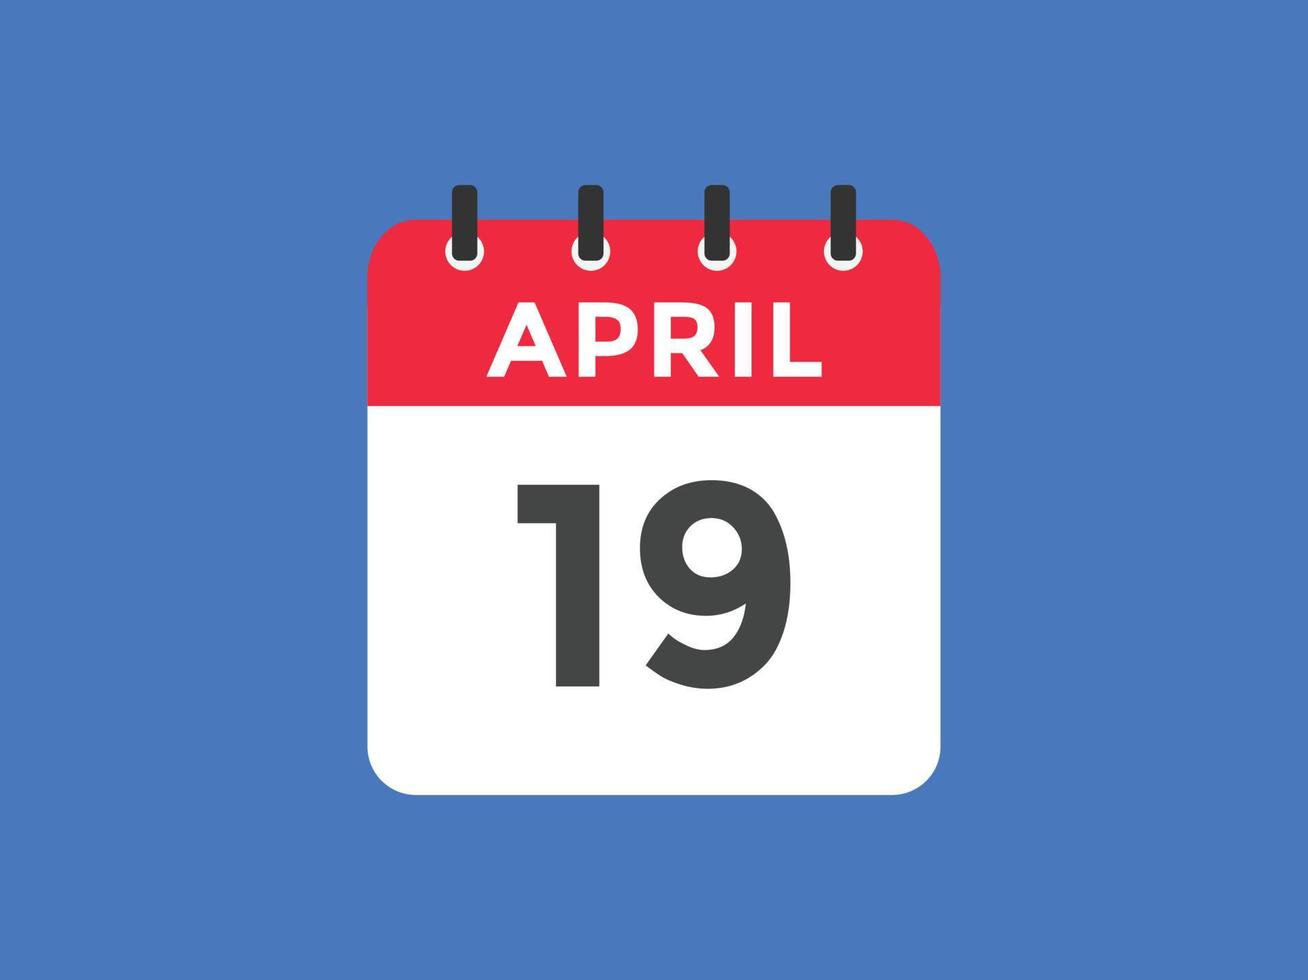 april 19 kalender påminnelse. 19:e april dagligen kalender ikon mall. kalender 19:e april ikon design mall. vektor illustration